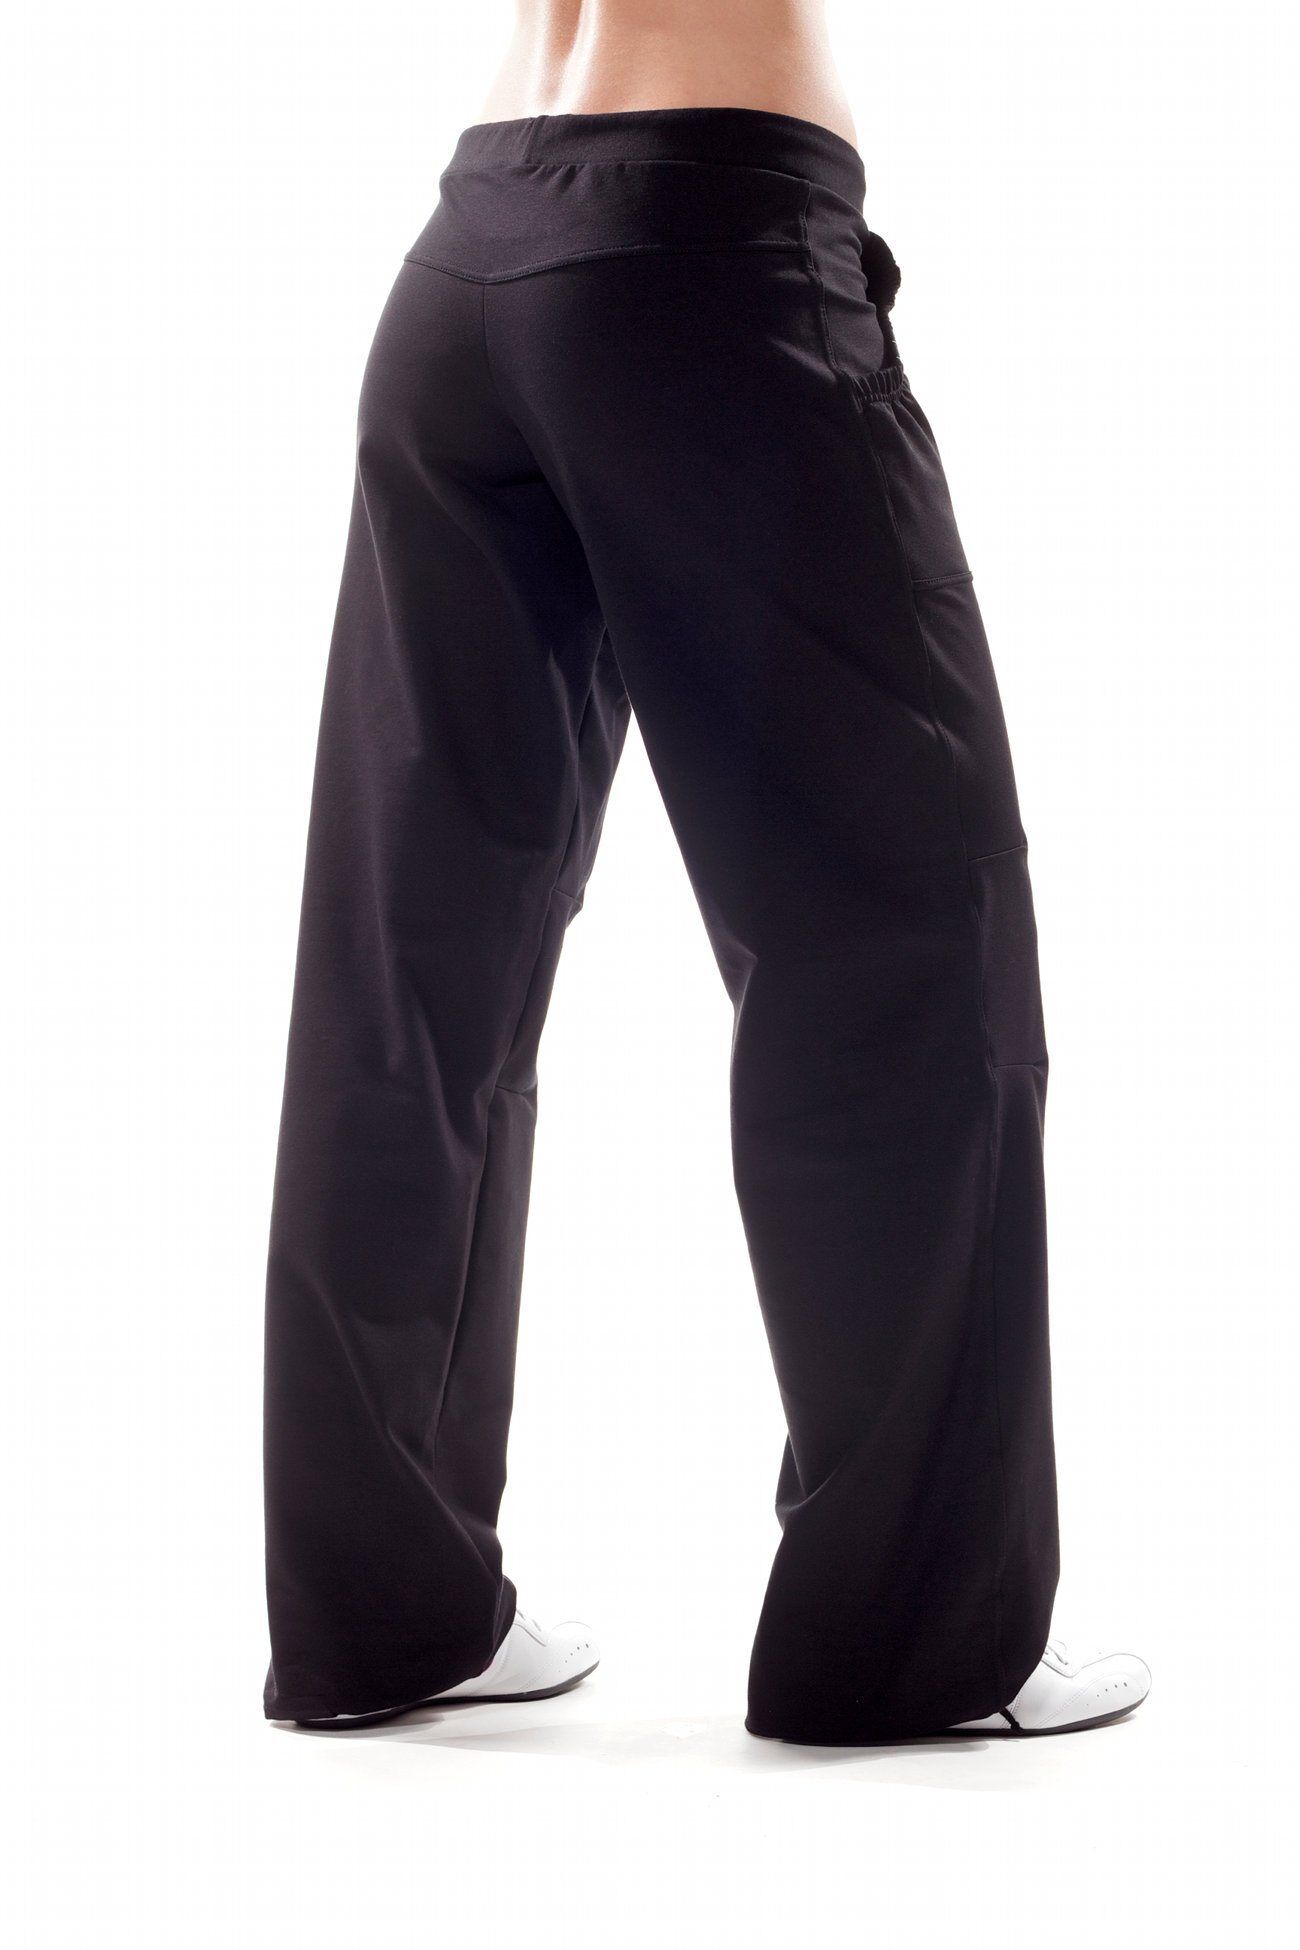 Winshape Sporthose »WTE9« All-Fit Style, schwarz